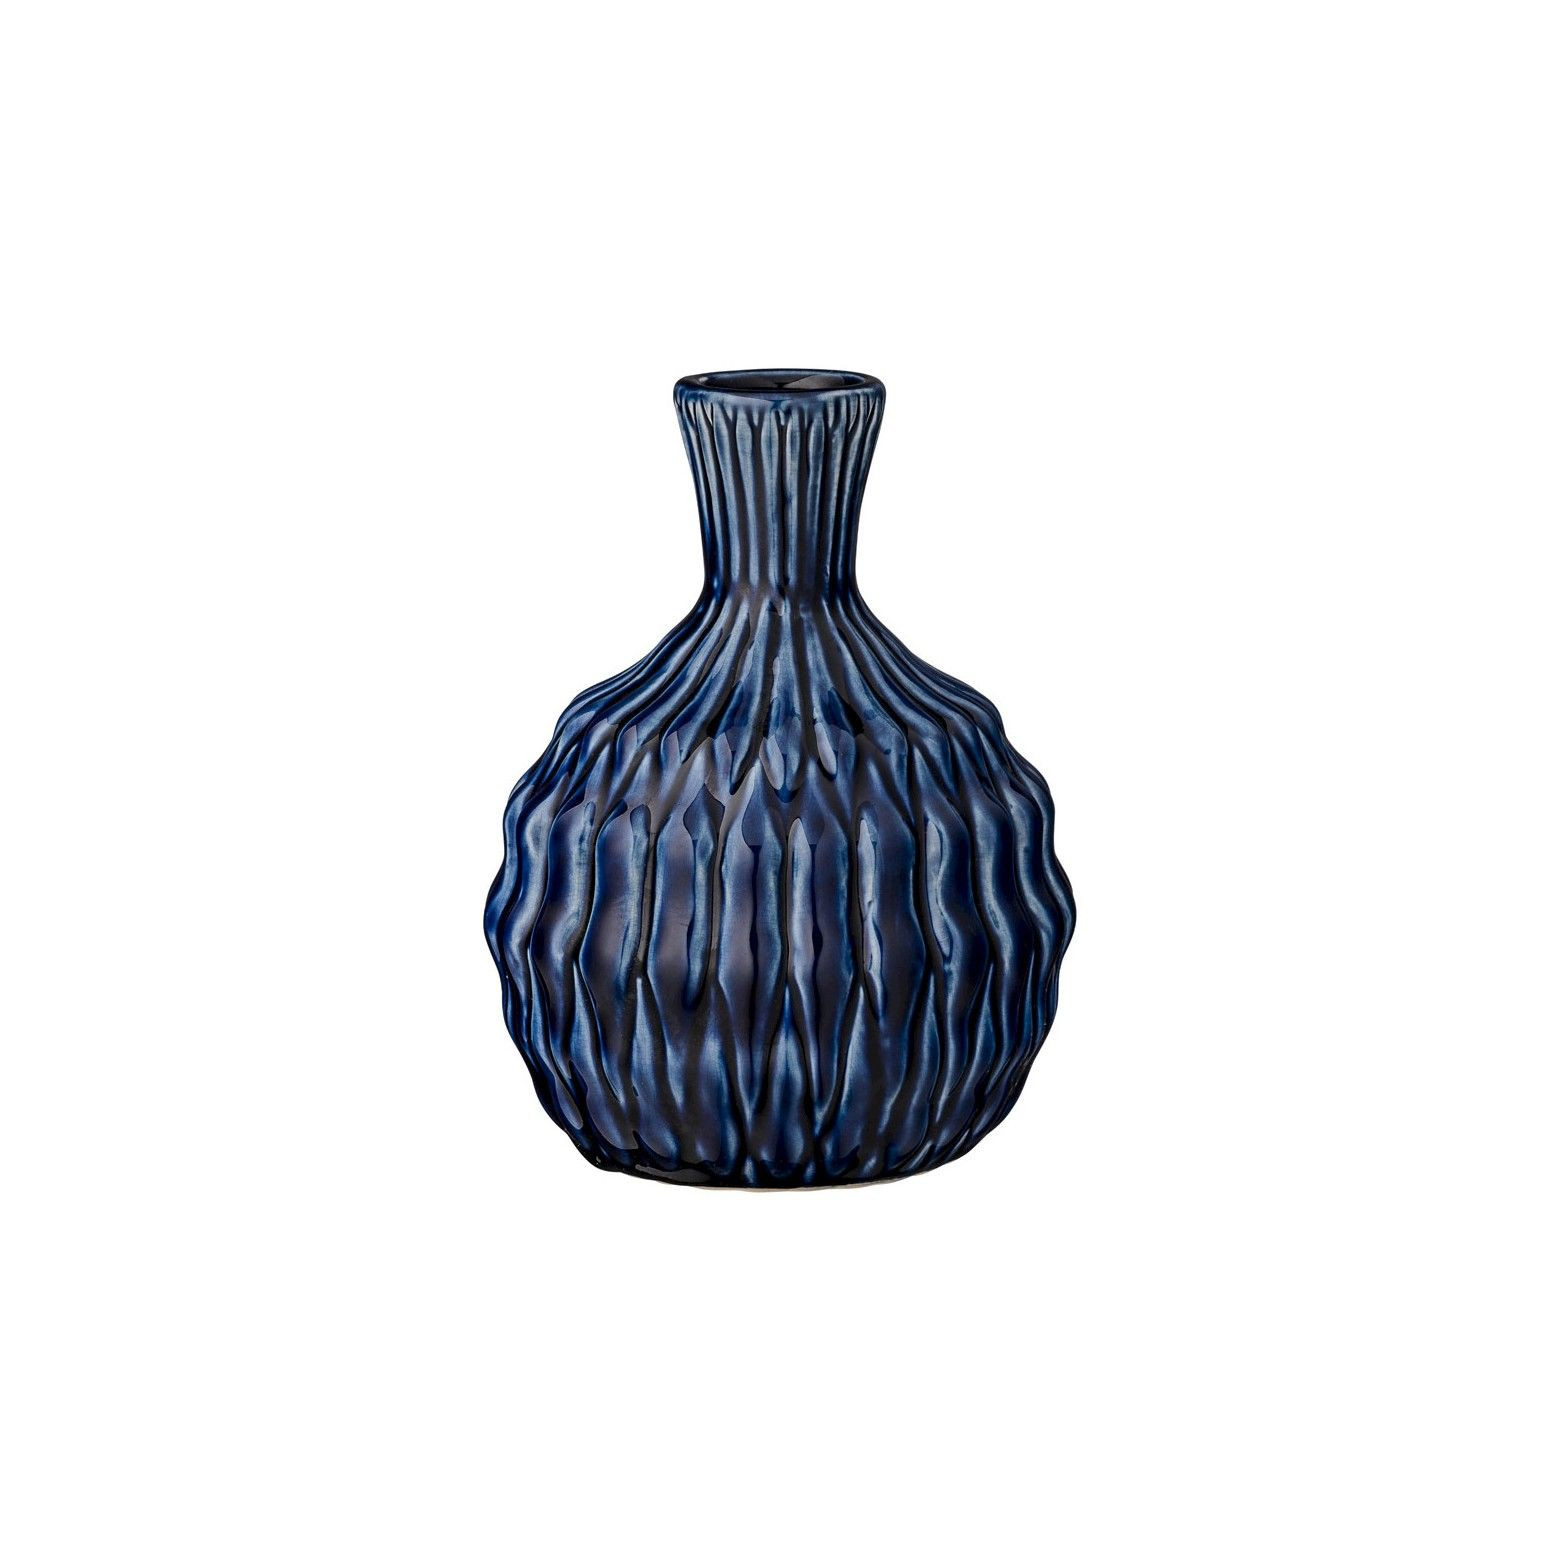 16 Fabulous Tuscan Ceramic Vases 2024 free download tuscan ceramic vases of ceramic vase navy blue 6 3r studios ceramic vase navy and with regard to ceramic vase navy blue 6 3r studios